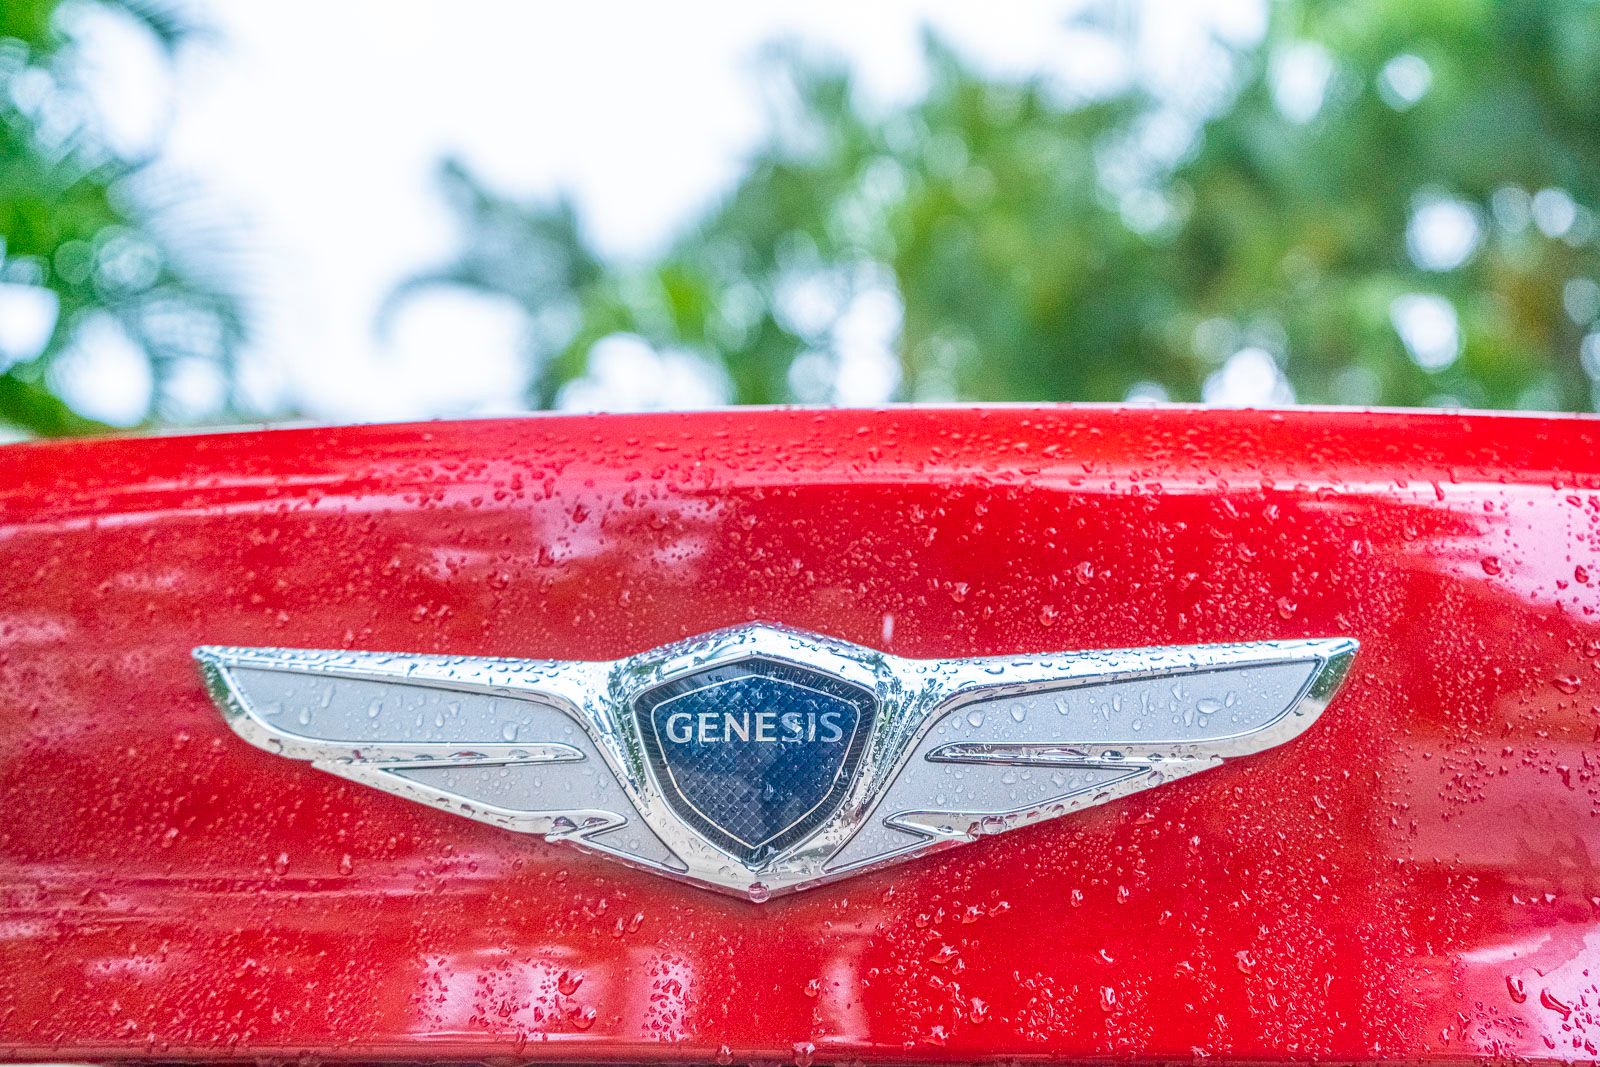 2019 Genesis G70 - Driven